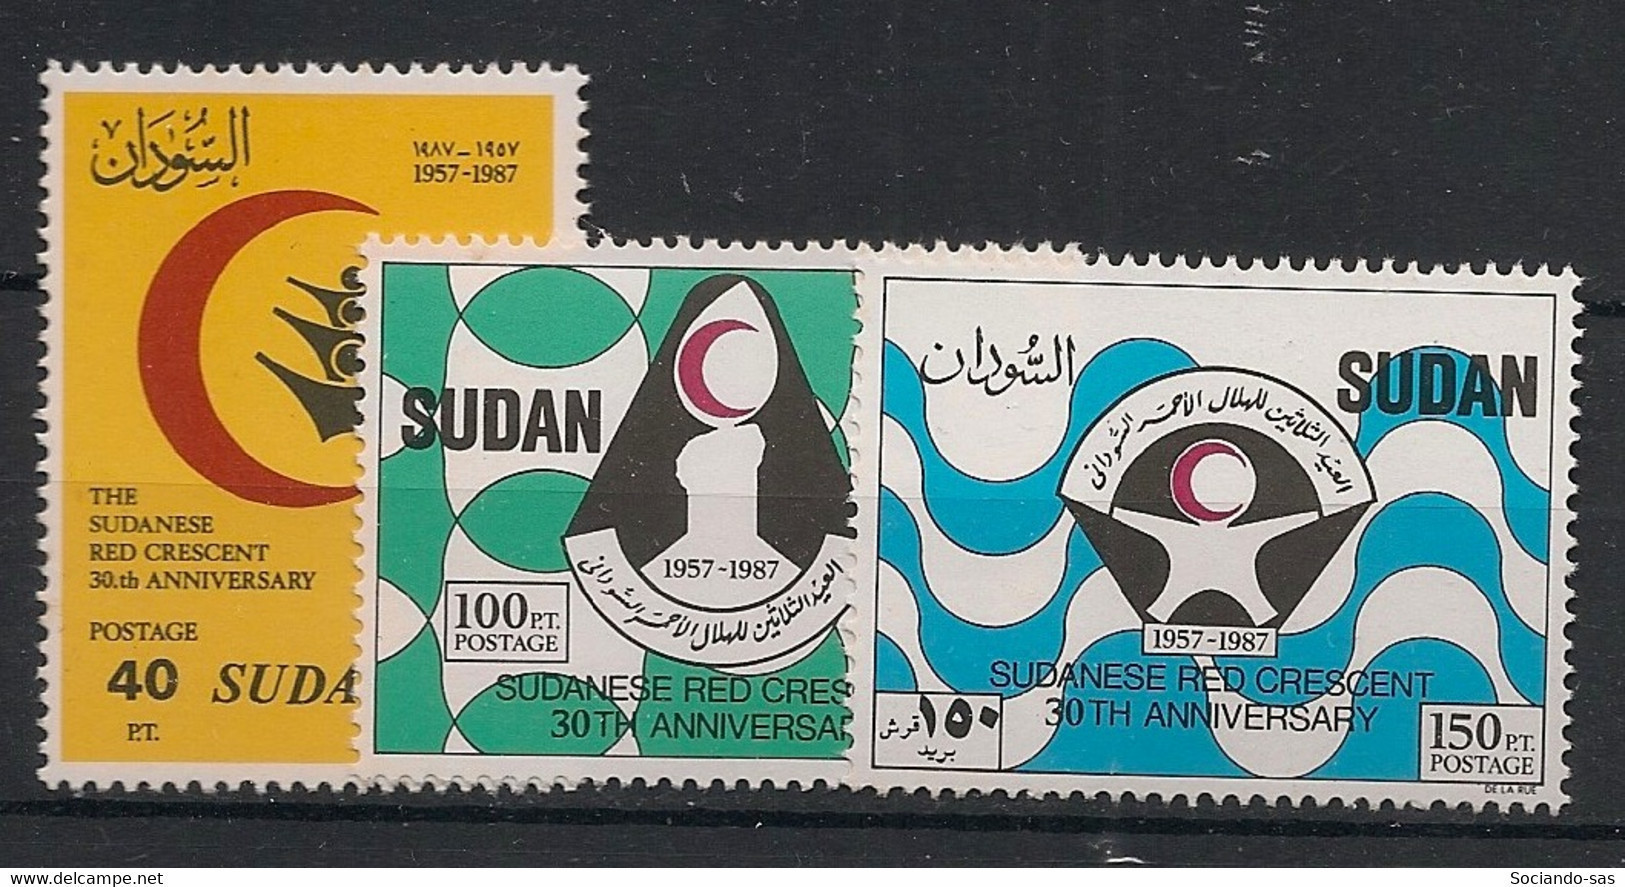 SOUDAN - 1989 - N°YT. 362 à 364 - Croissant Rouge - Neuf Luxe ** / MNH / Postfrisch - Soedan (1954-...)